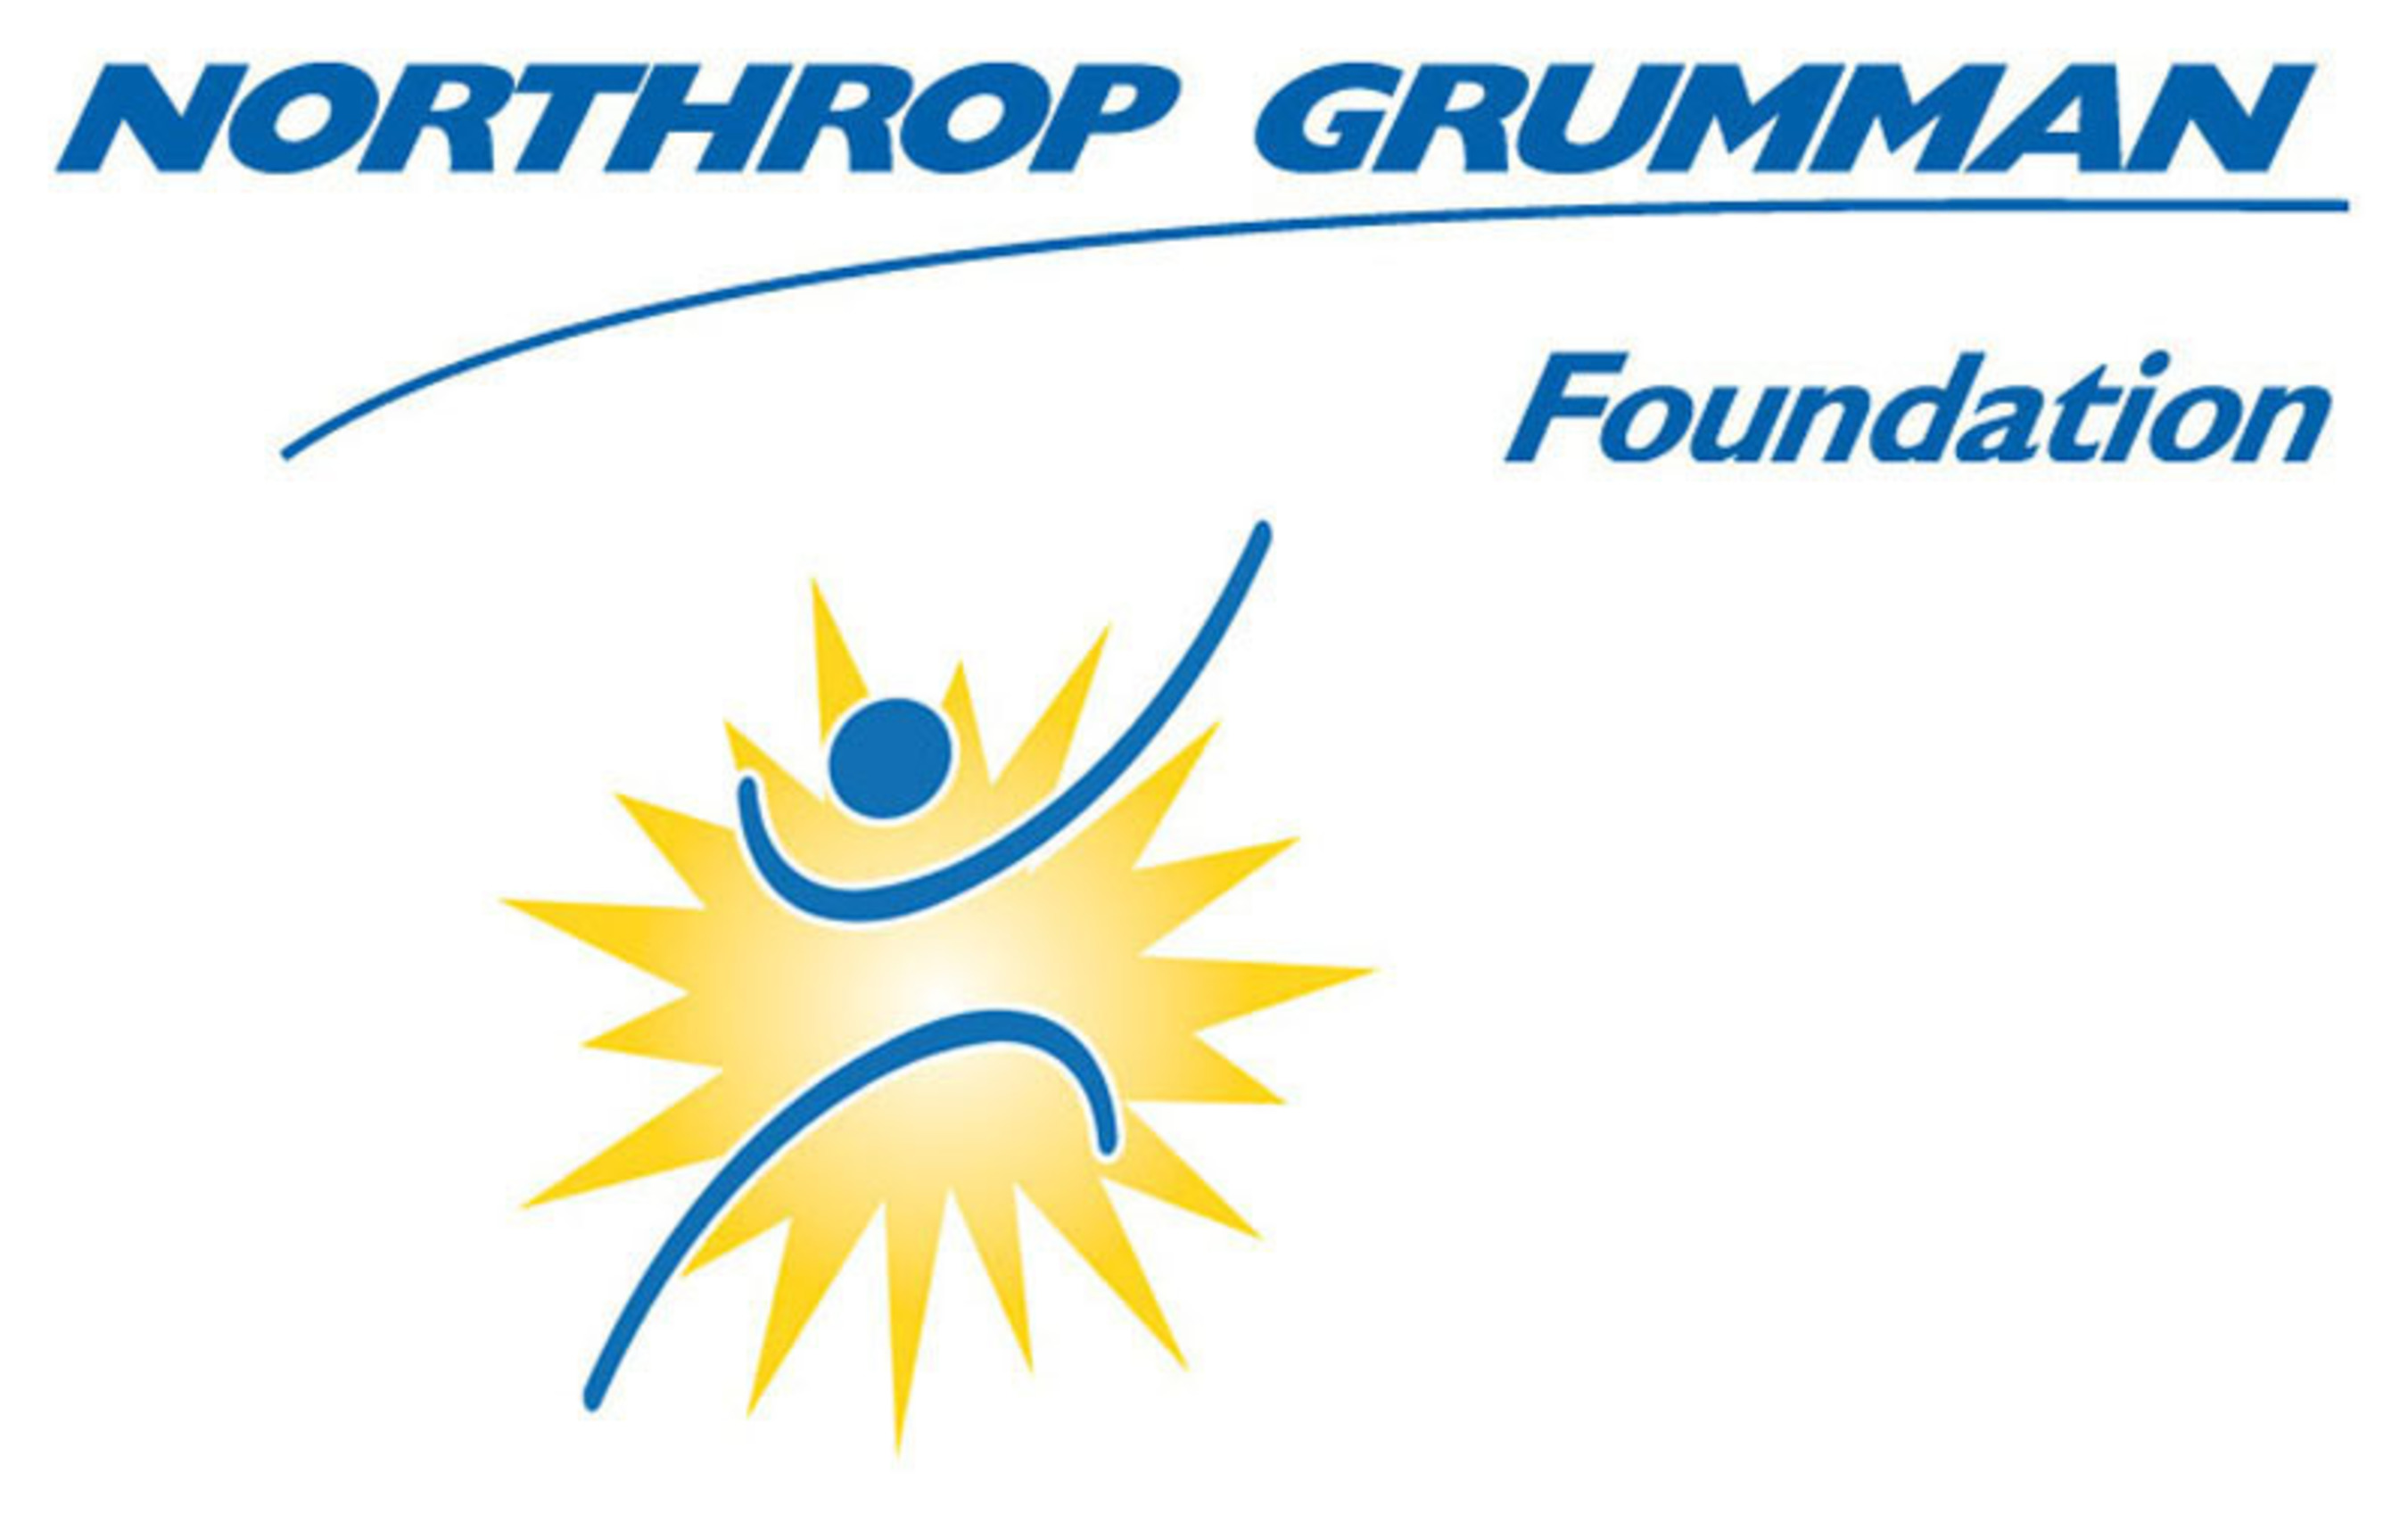 Northrop Grumman Foundation logo.